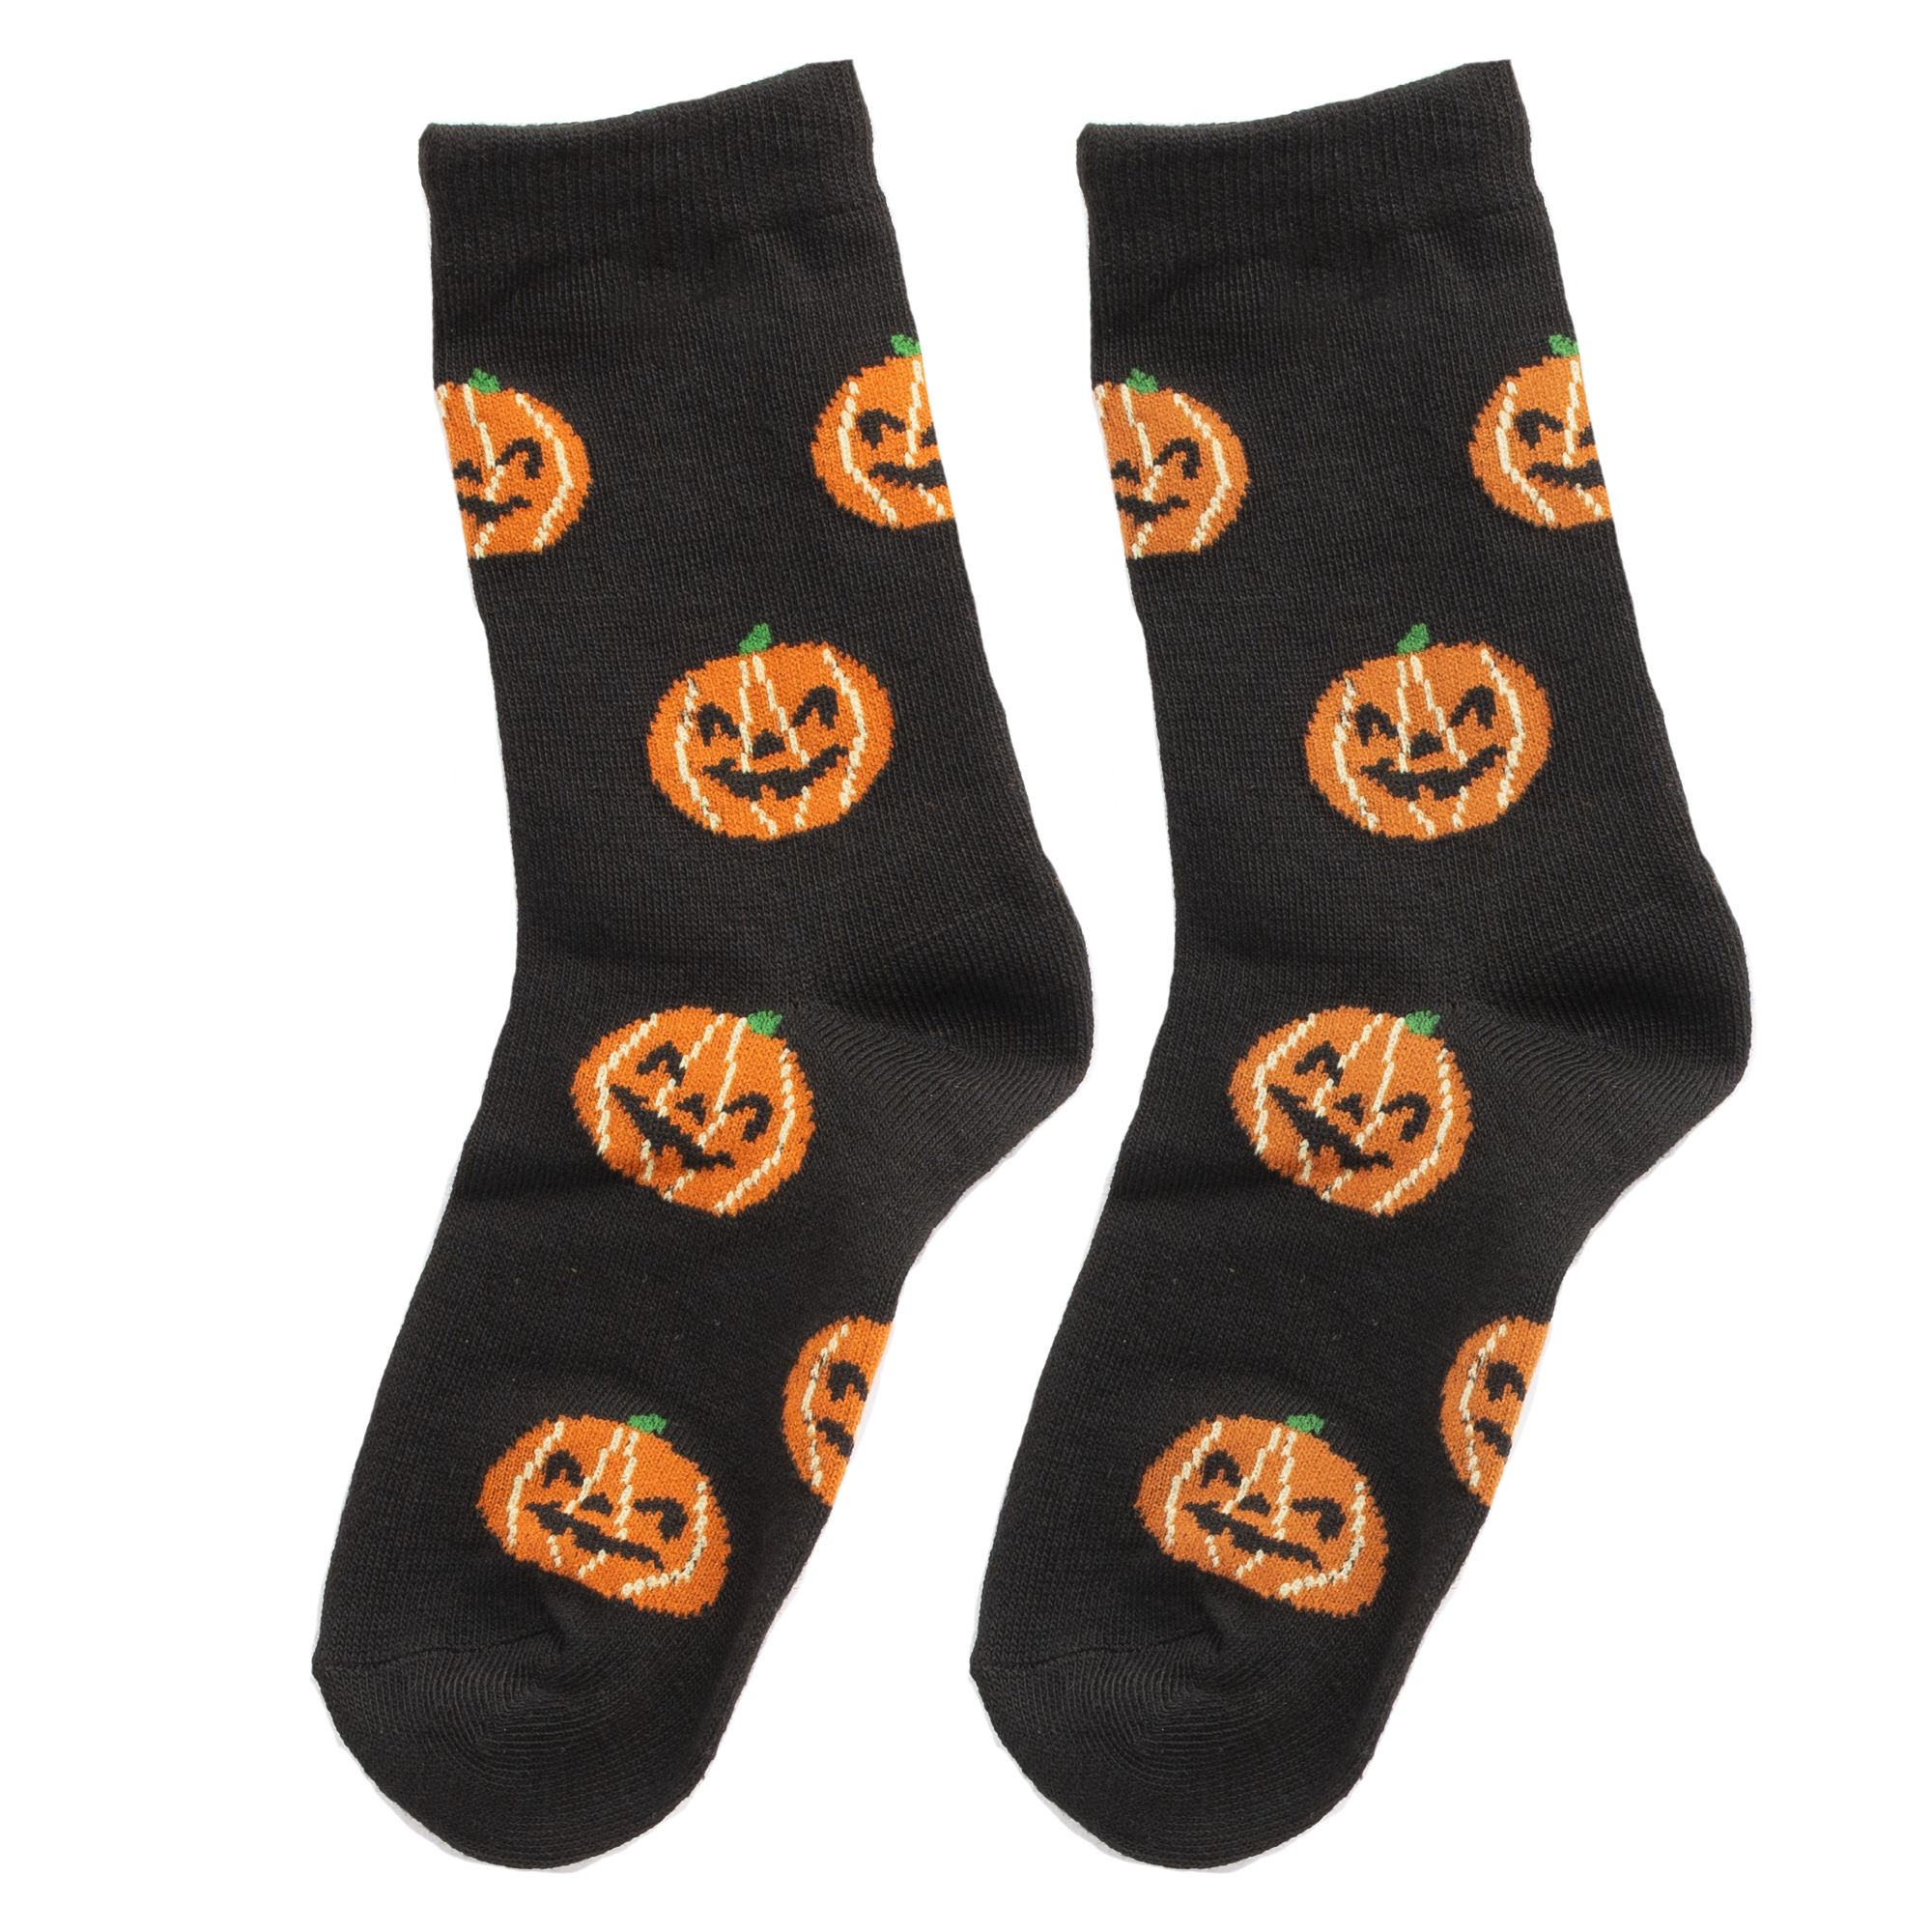 Pumpkin Halloween Socks by Windy City Novelties